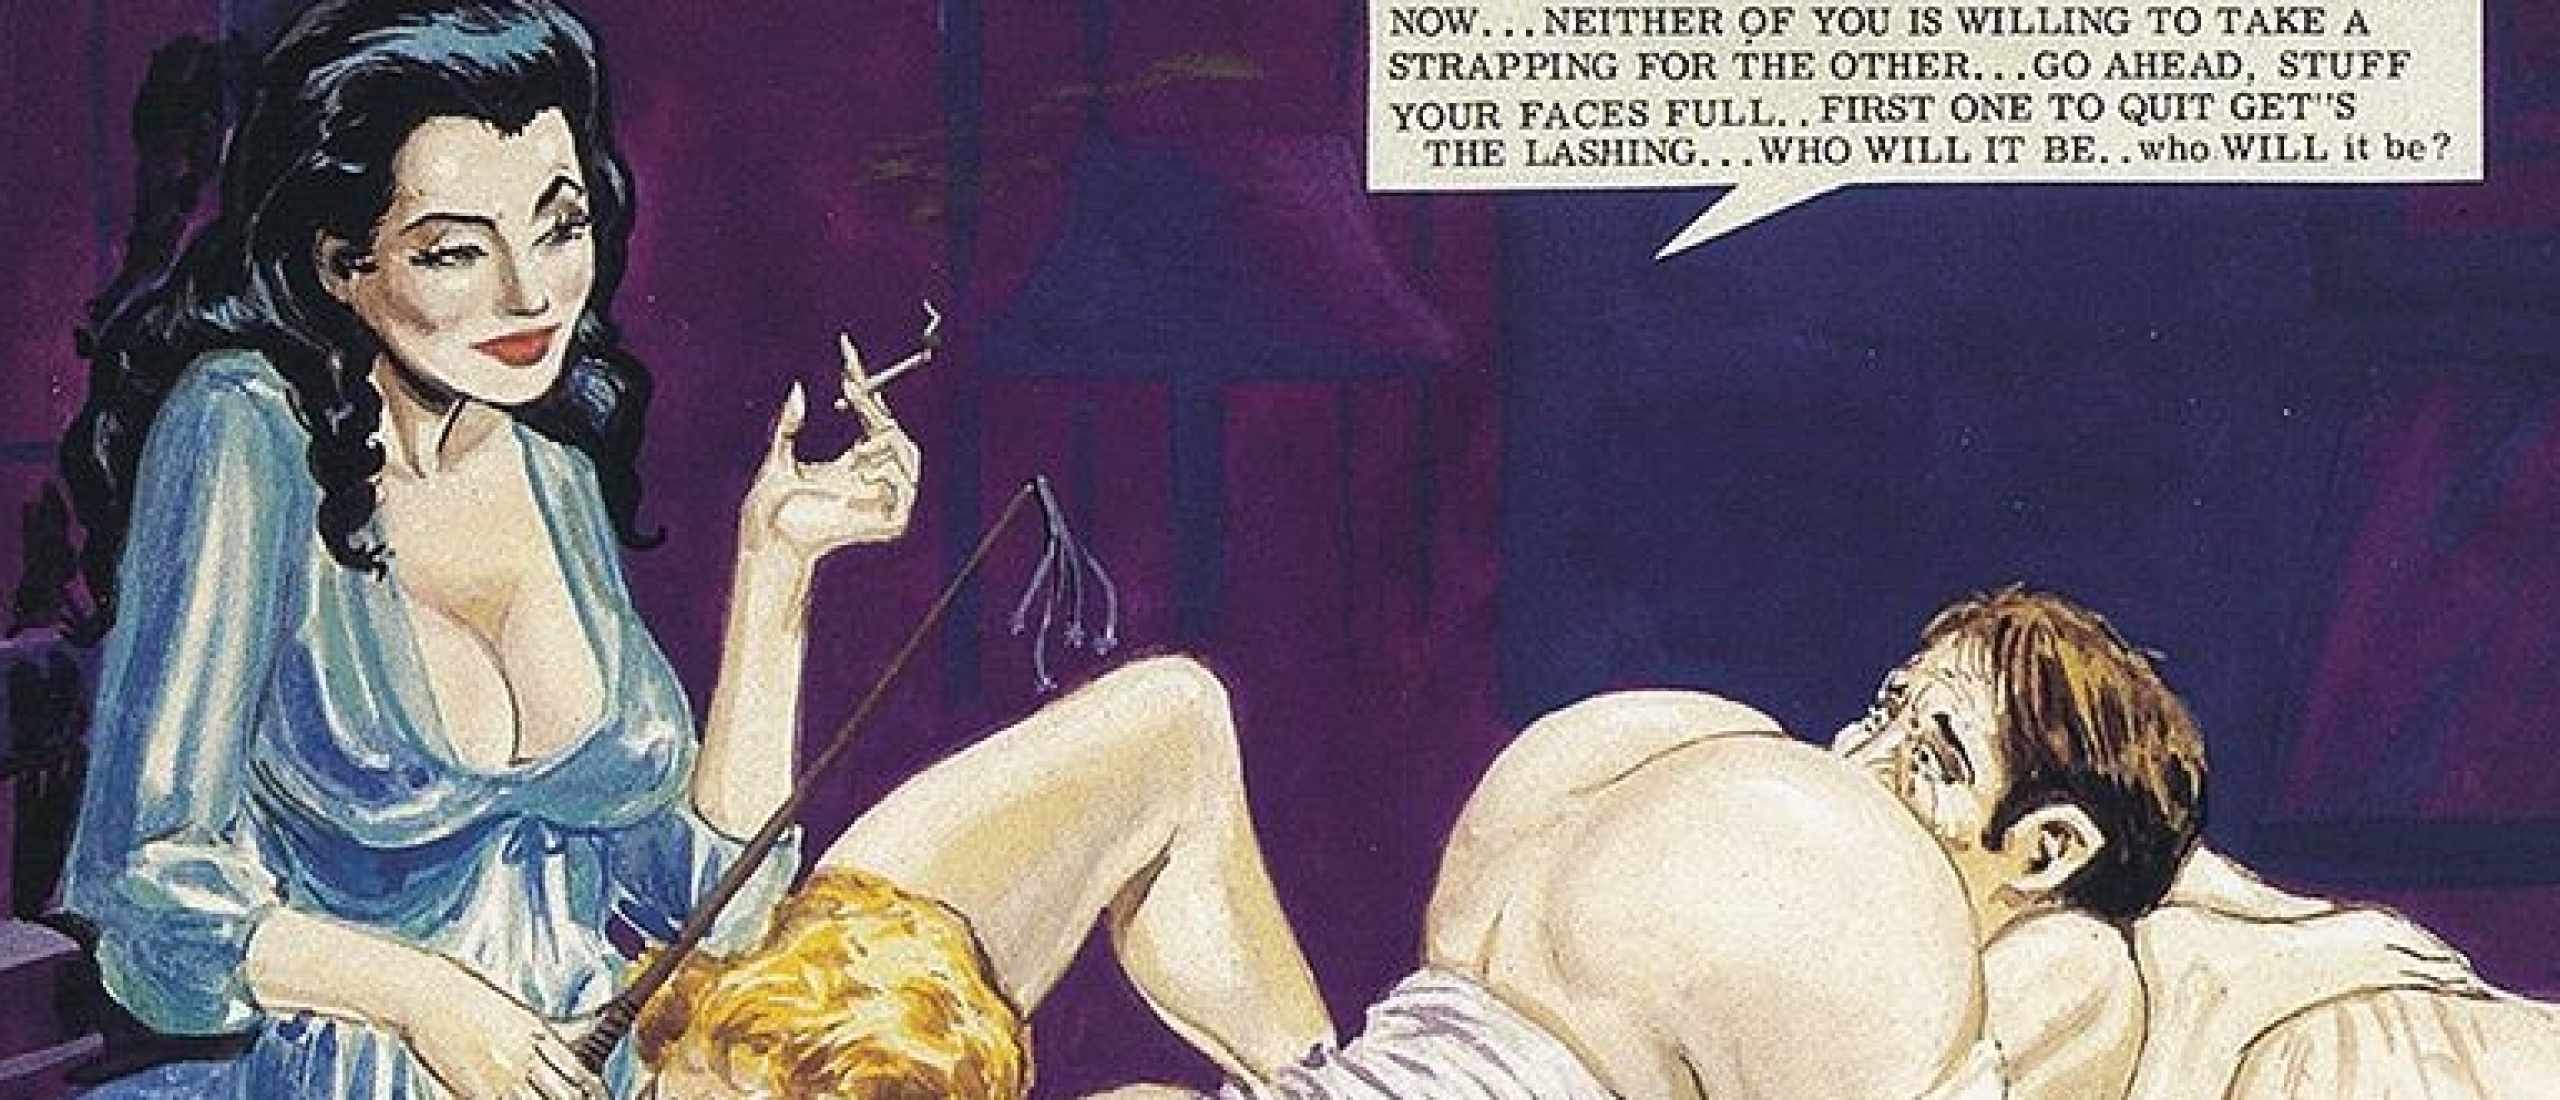 No Chance For Men: The Eric Stanton's Sadomasochist Comics